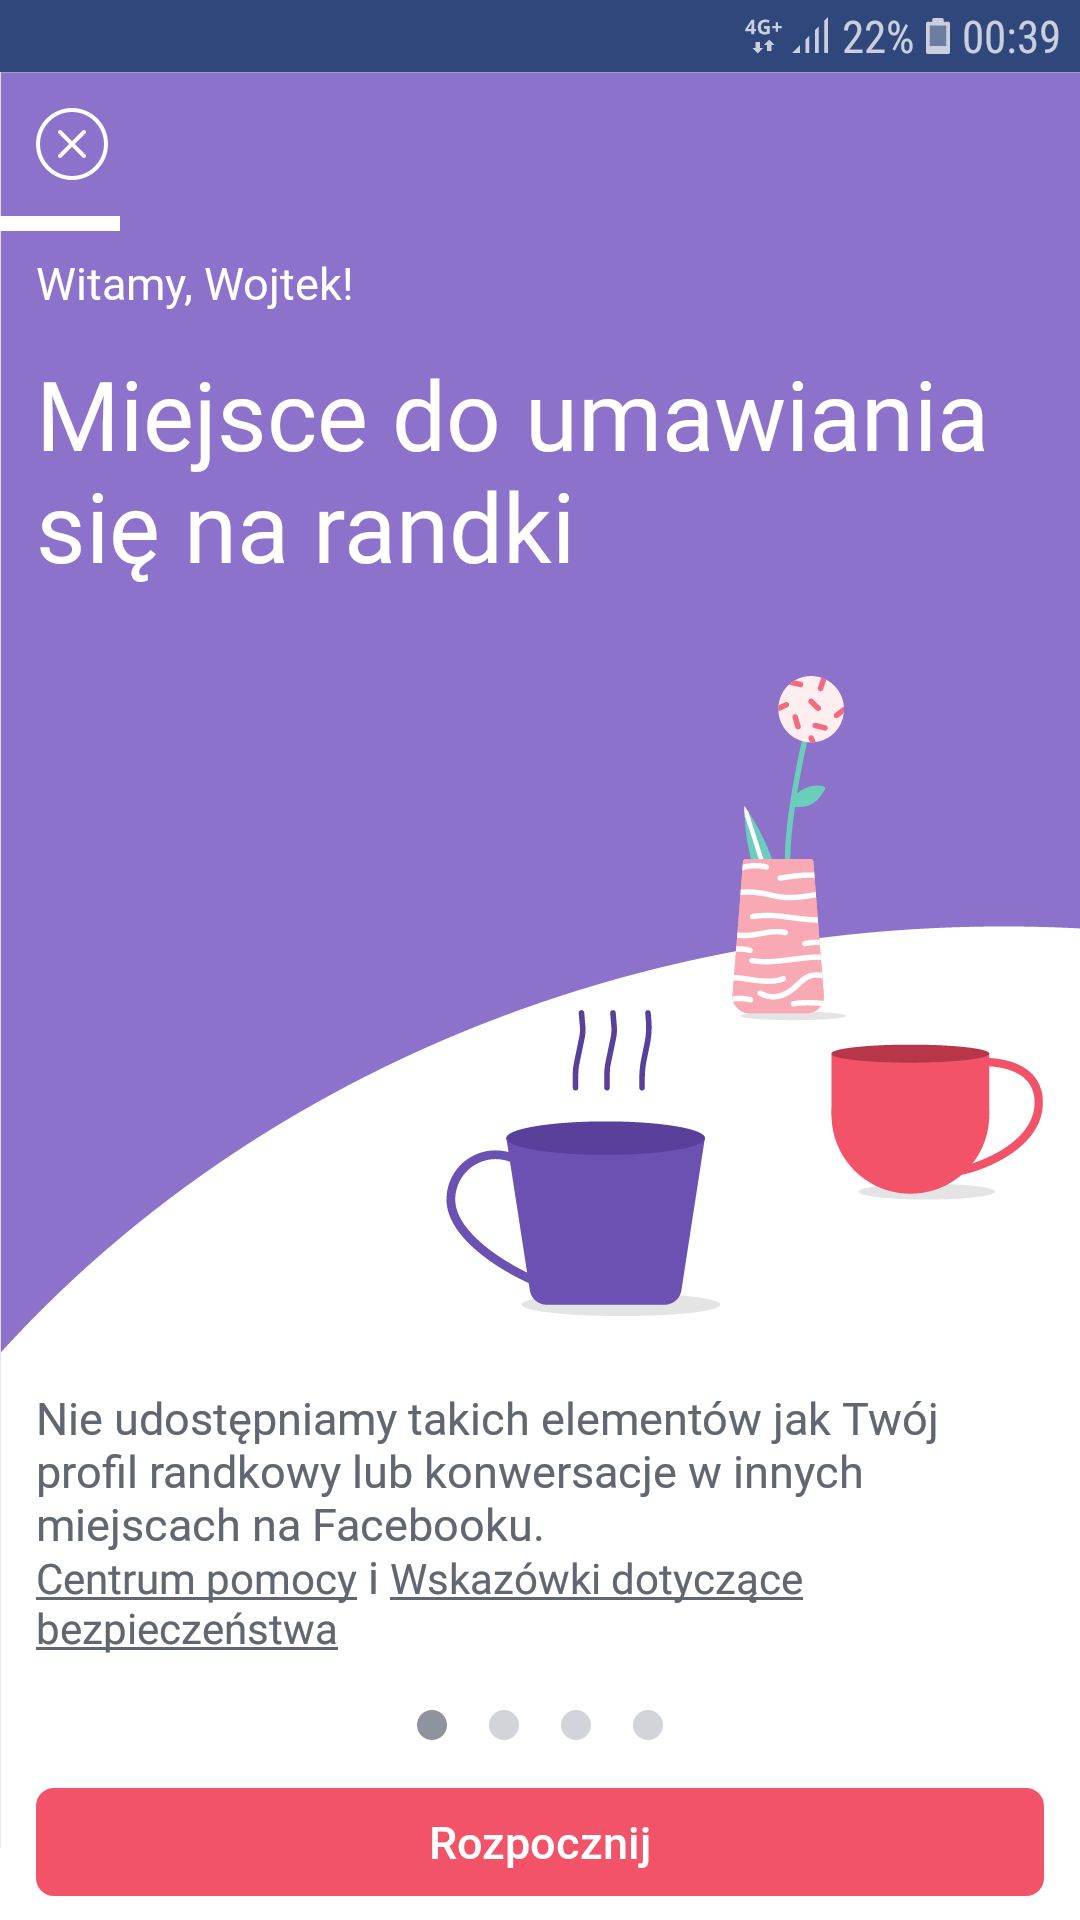 Randki Facebooka niedugo zadebiutuj w Polsce